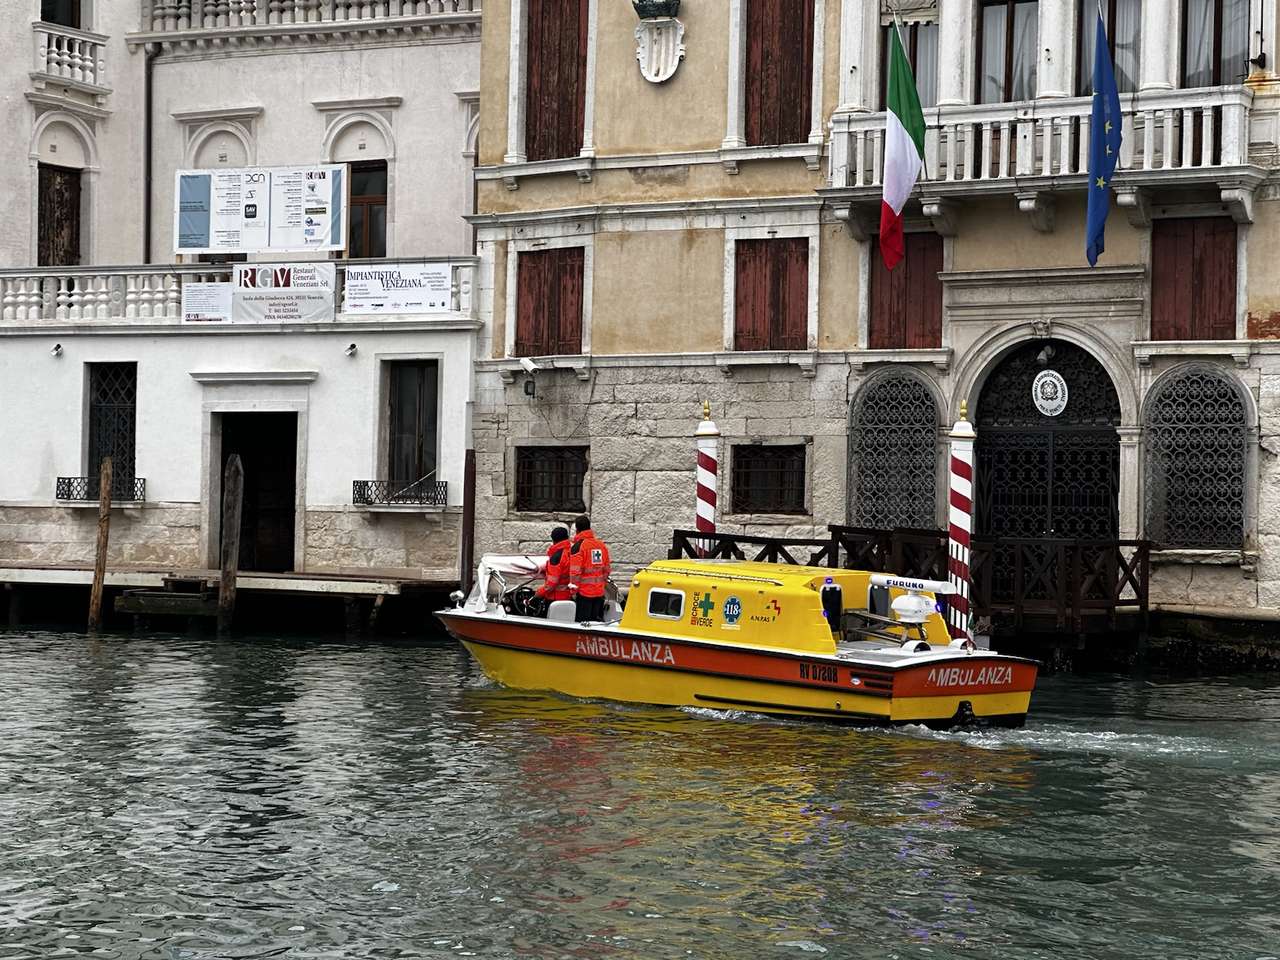 Ambulance in Venice online puzzle